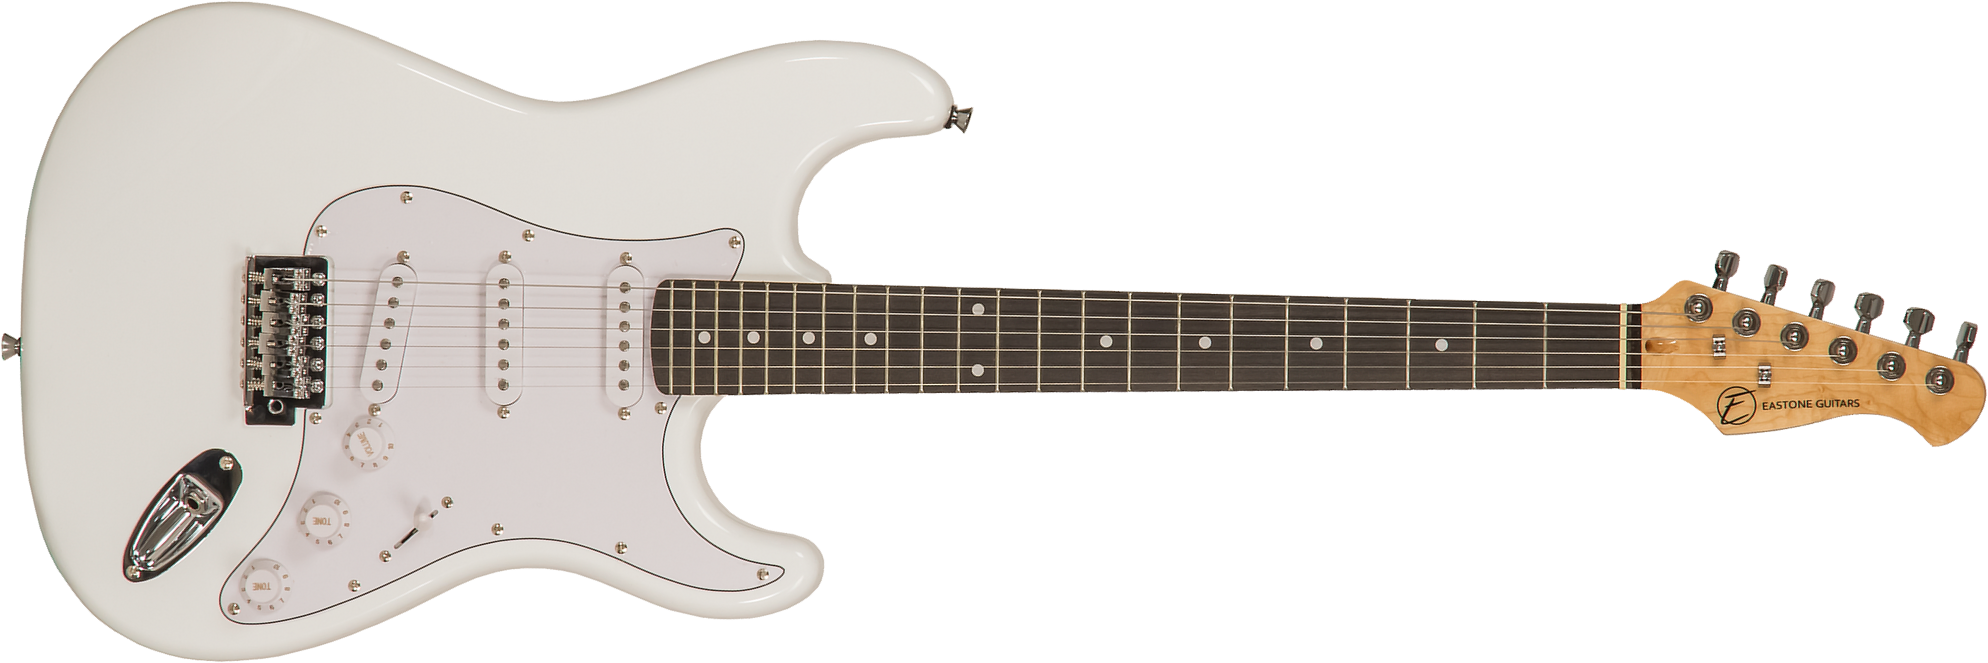 Eastone Str70 3s Trem Pur - Olympic White - E-Gitarre in Str-Form - Main picture